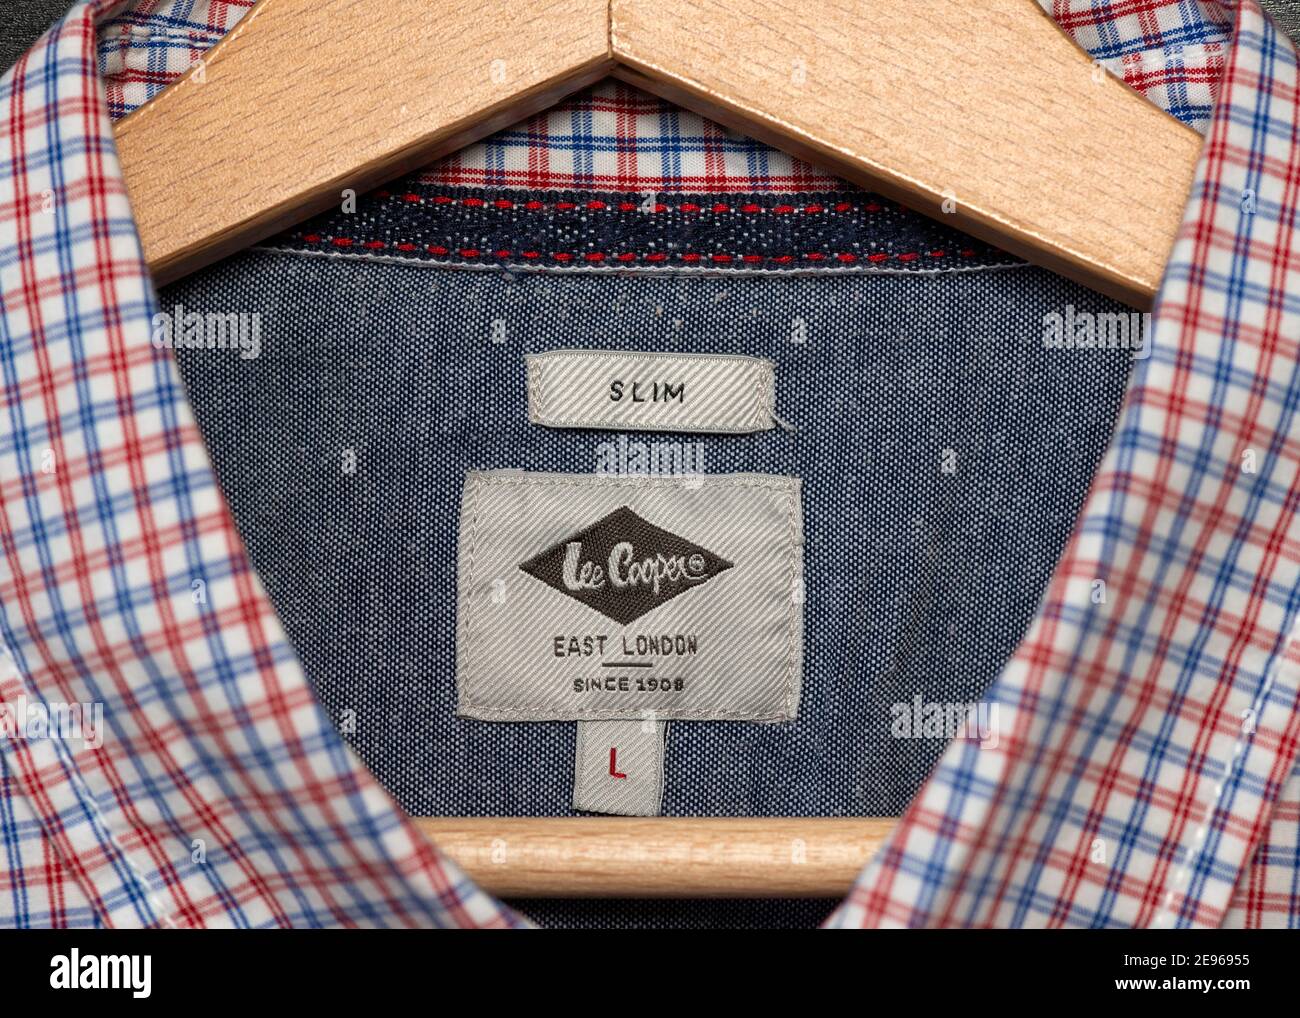 Lee Cooper East London slim fit label on men's shirt hanging on wooden  hanger Stock Photo - Alamy